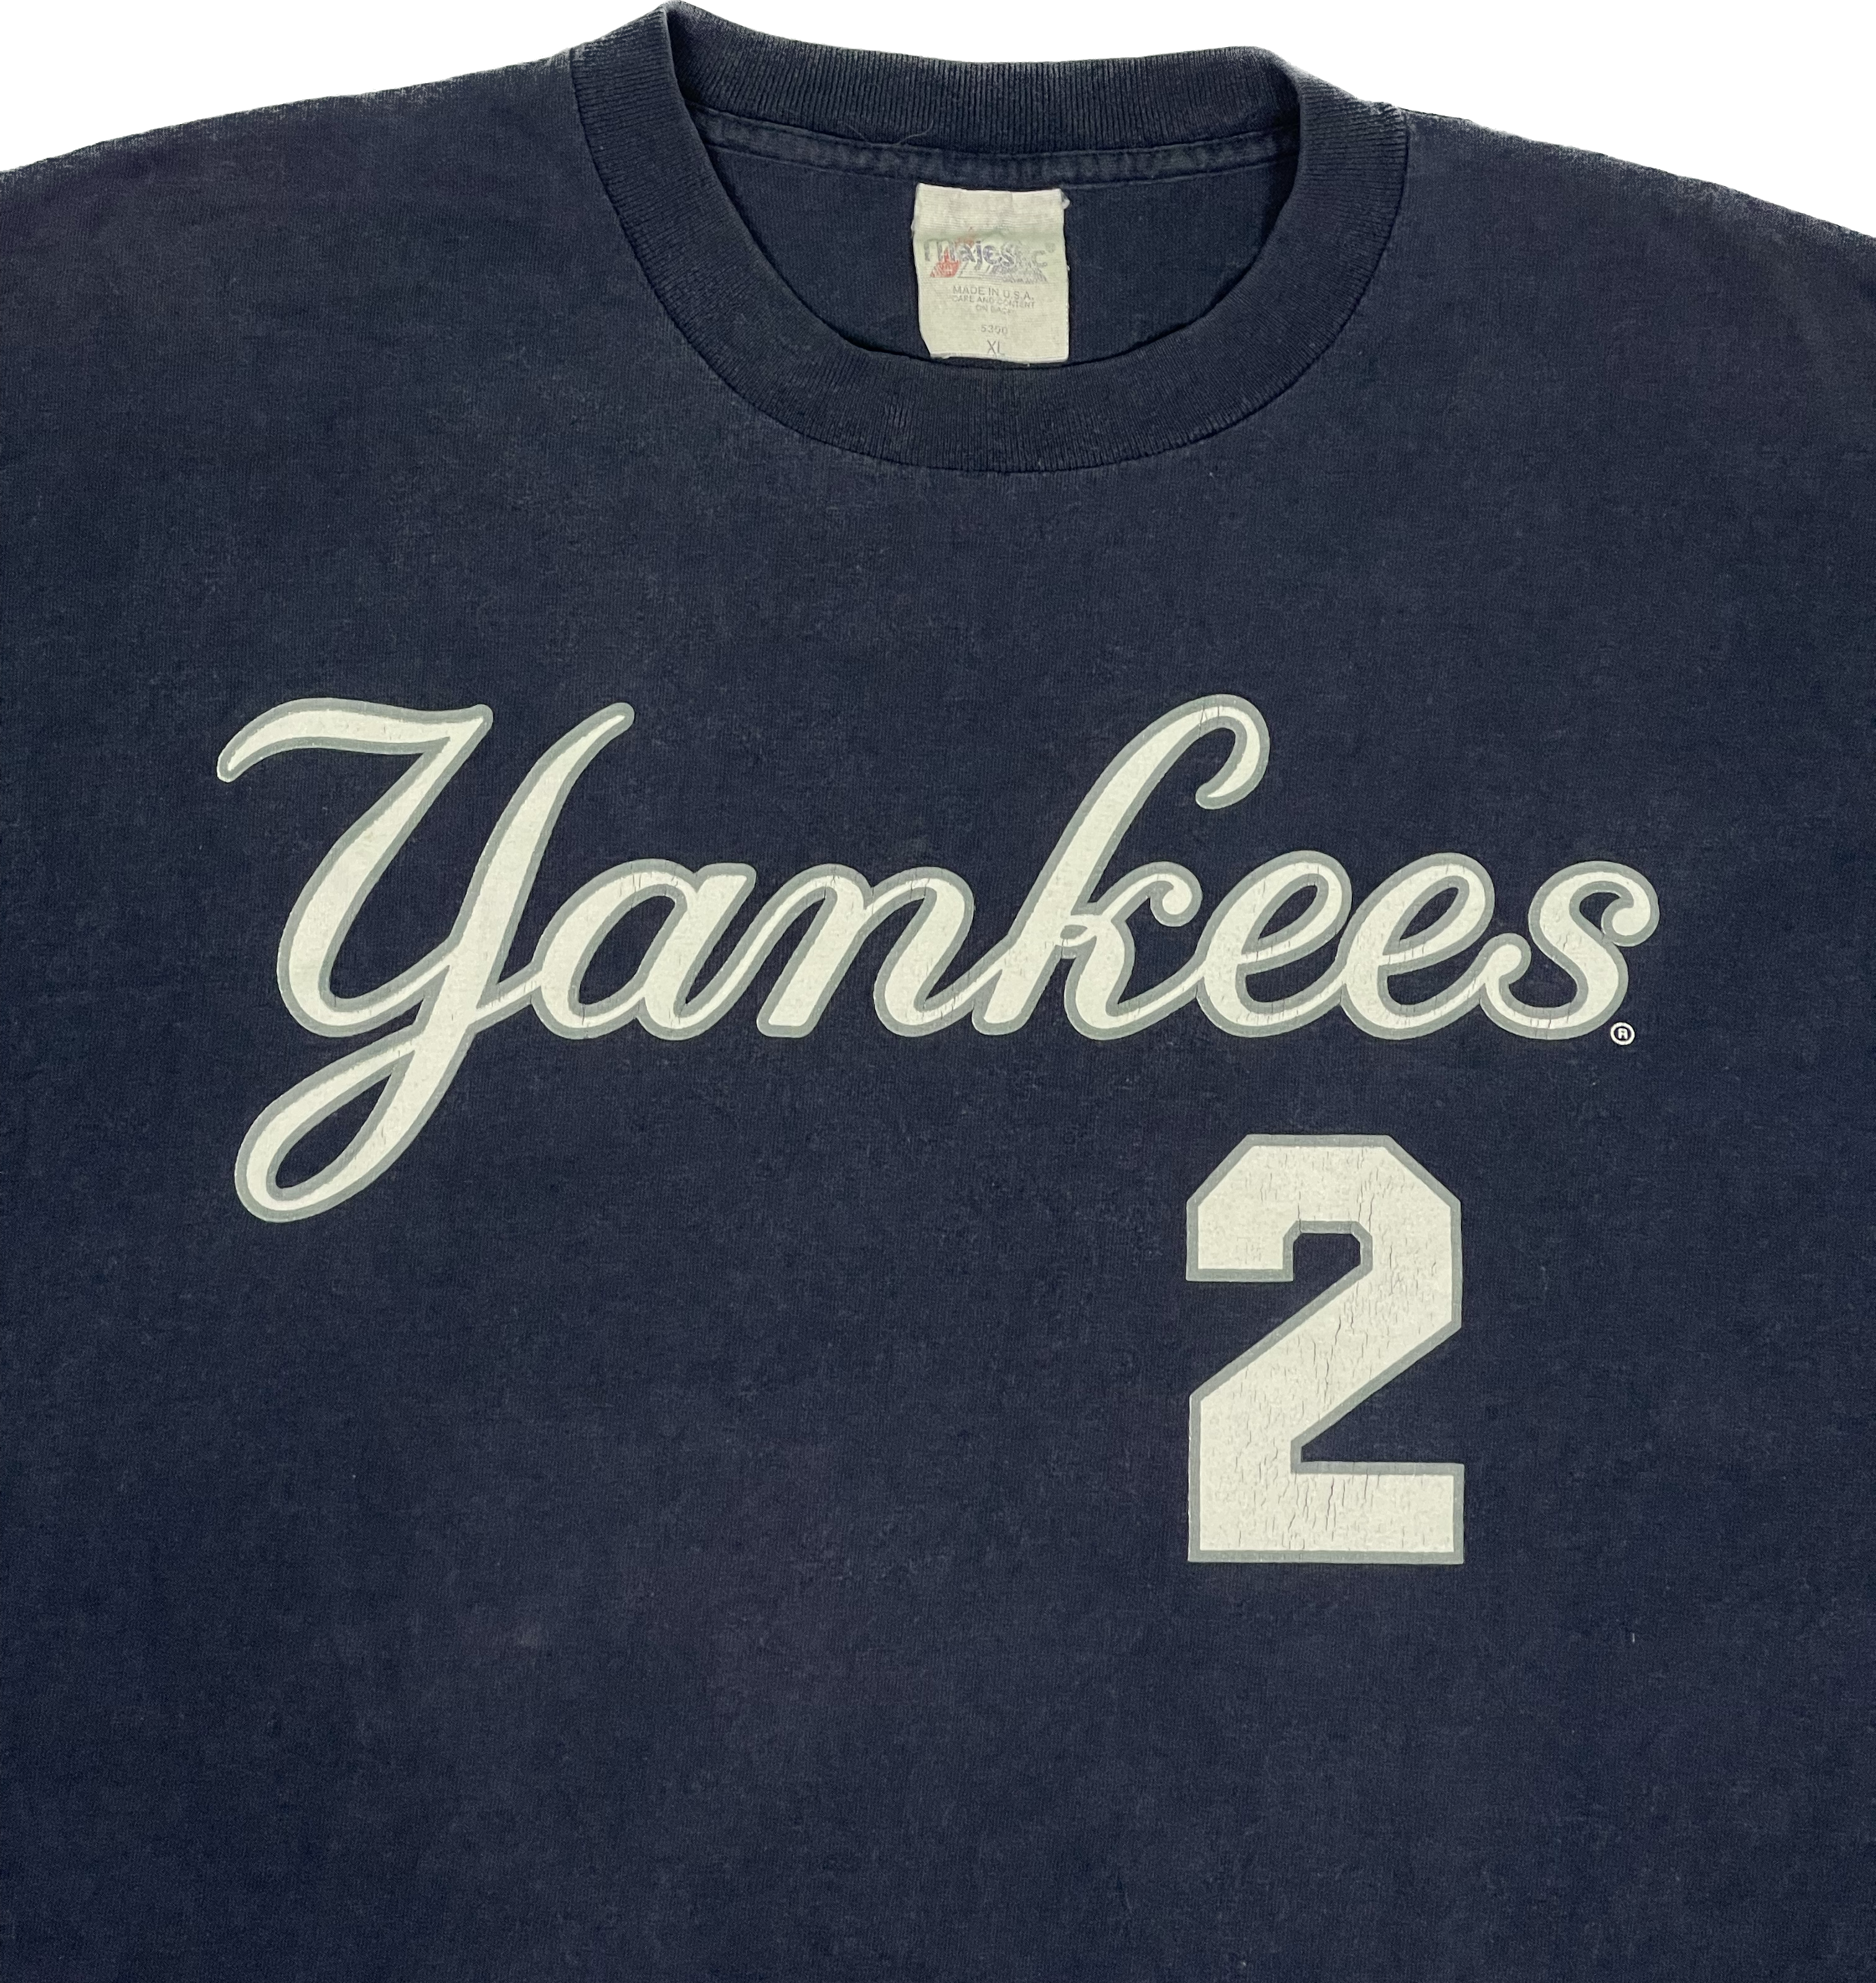 Yankees Vintage T-Shirt